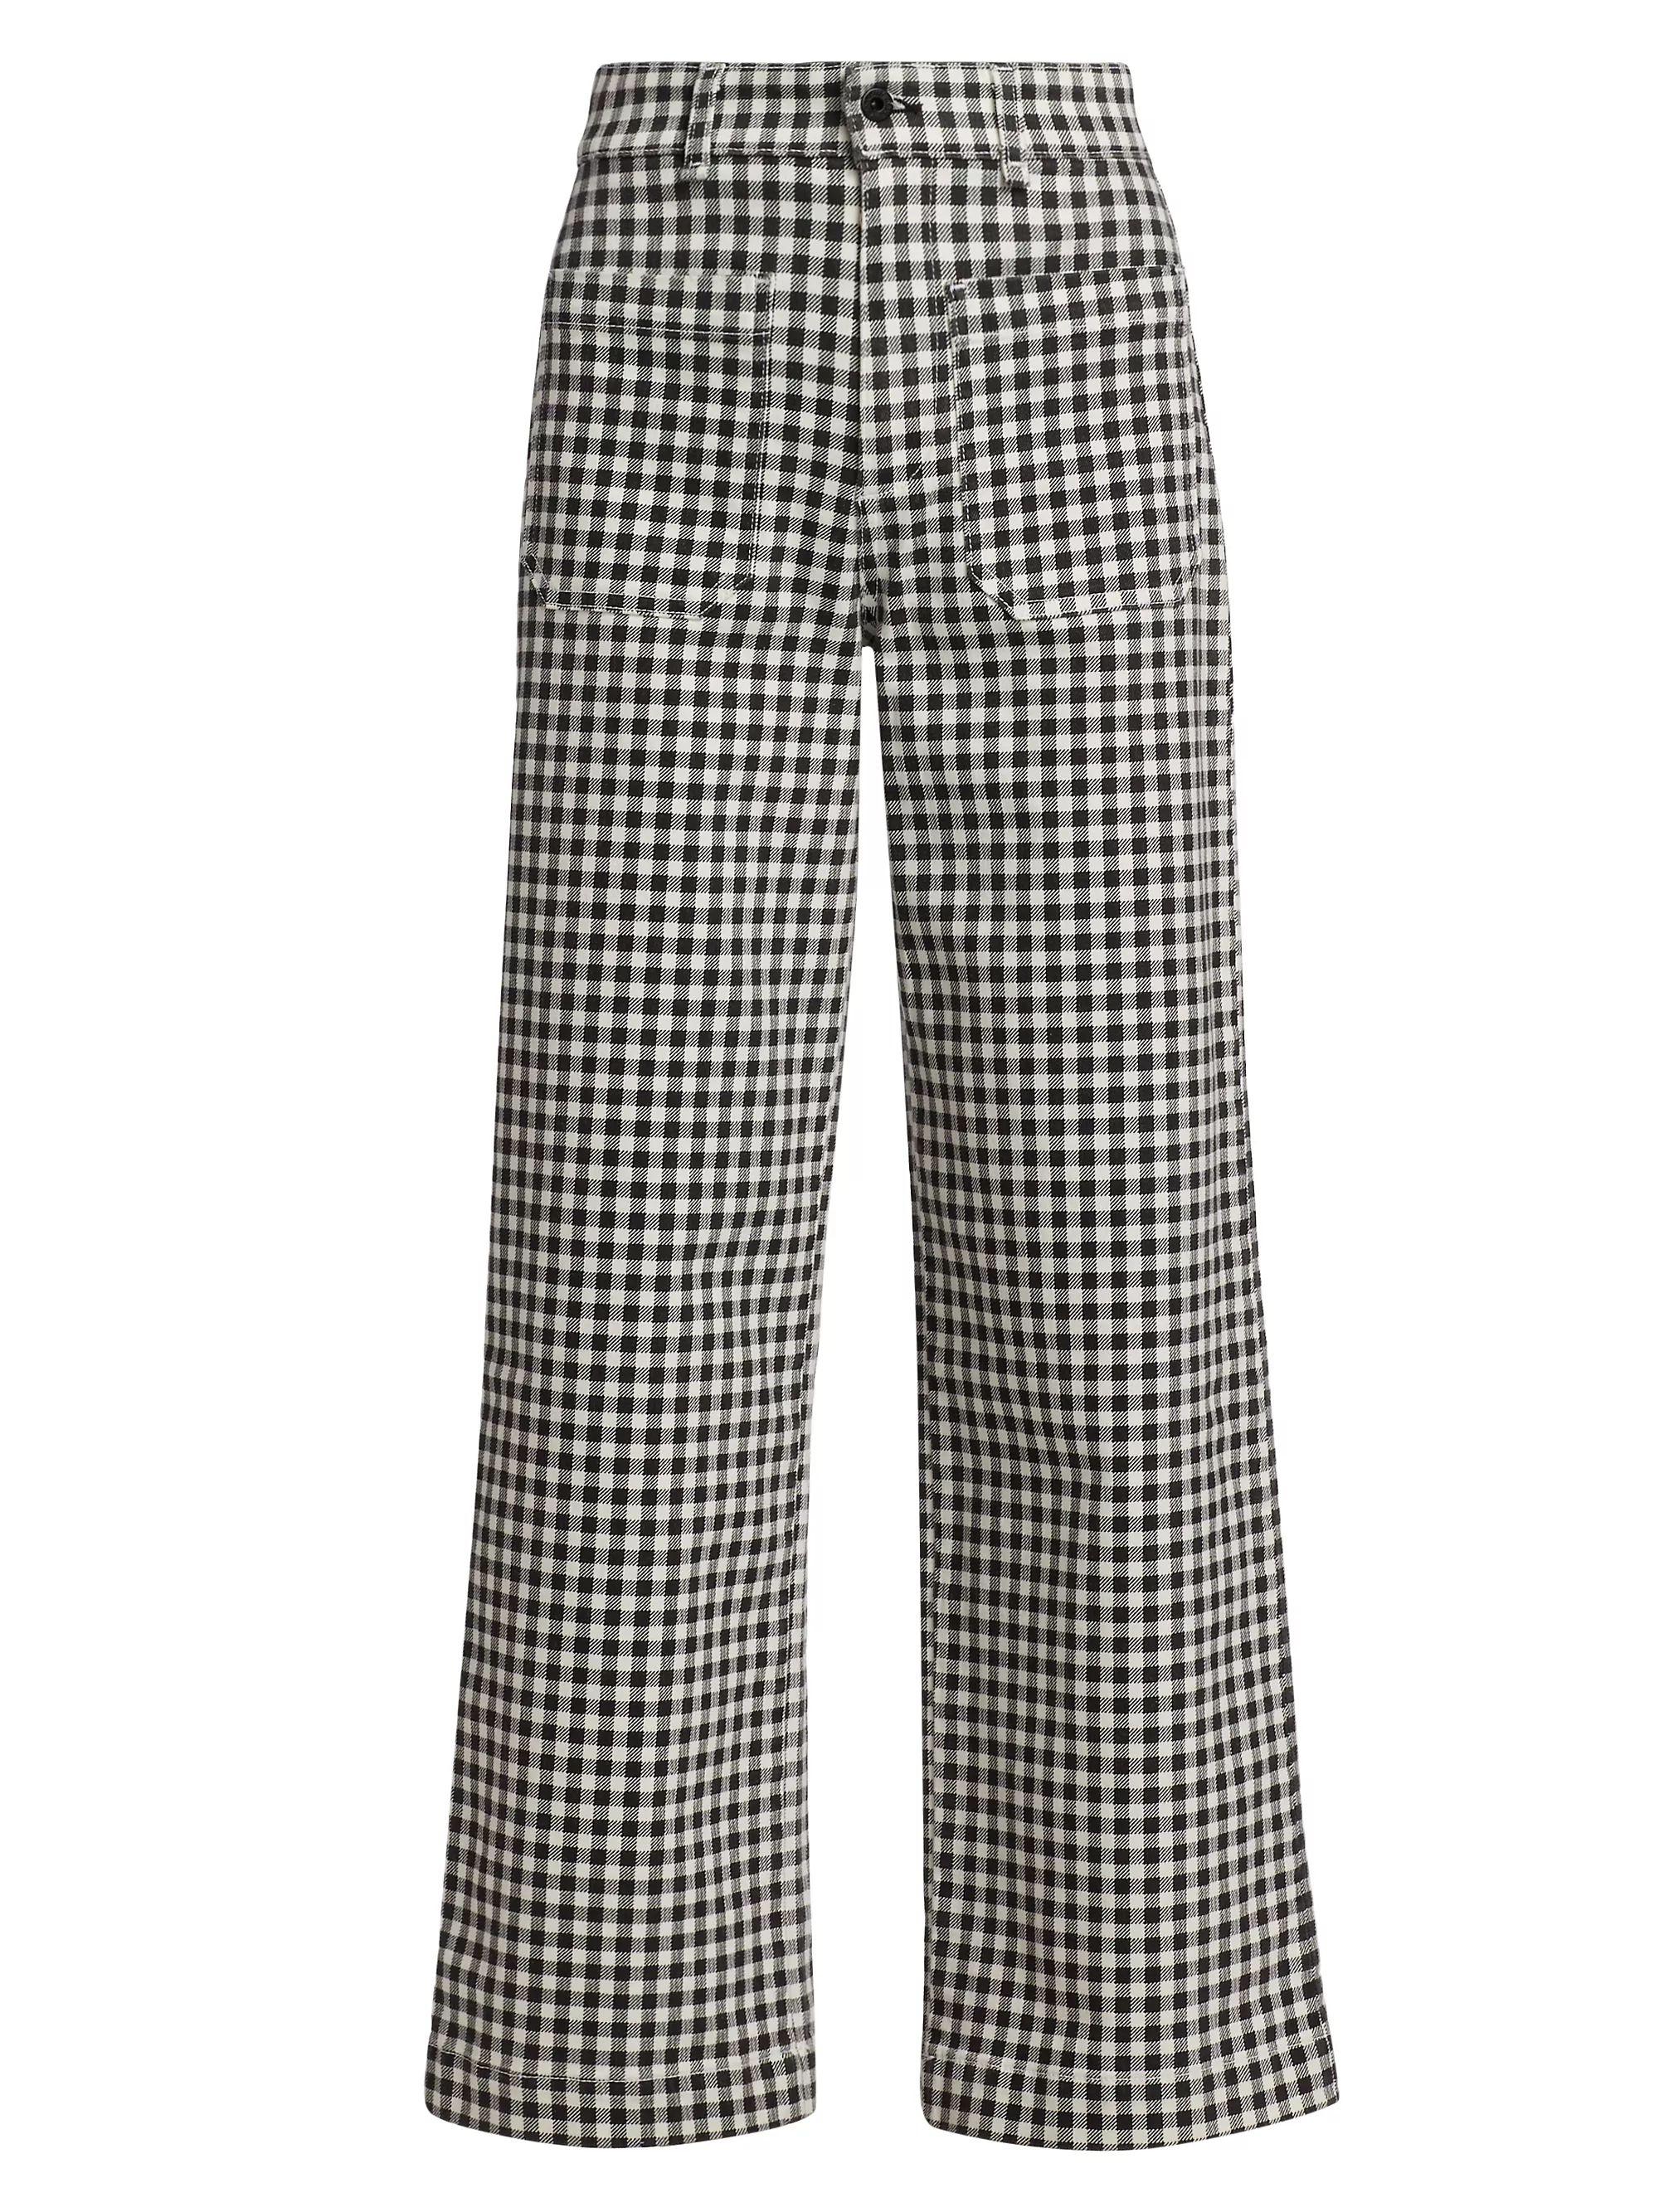 JeansStraight LegAskk NYSailor Shepherd Check Denim Pants$178.50$255
            
          Spend... | Saks Fifth Avenue